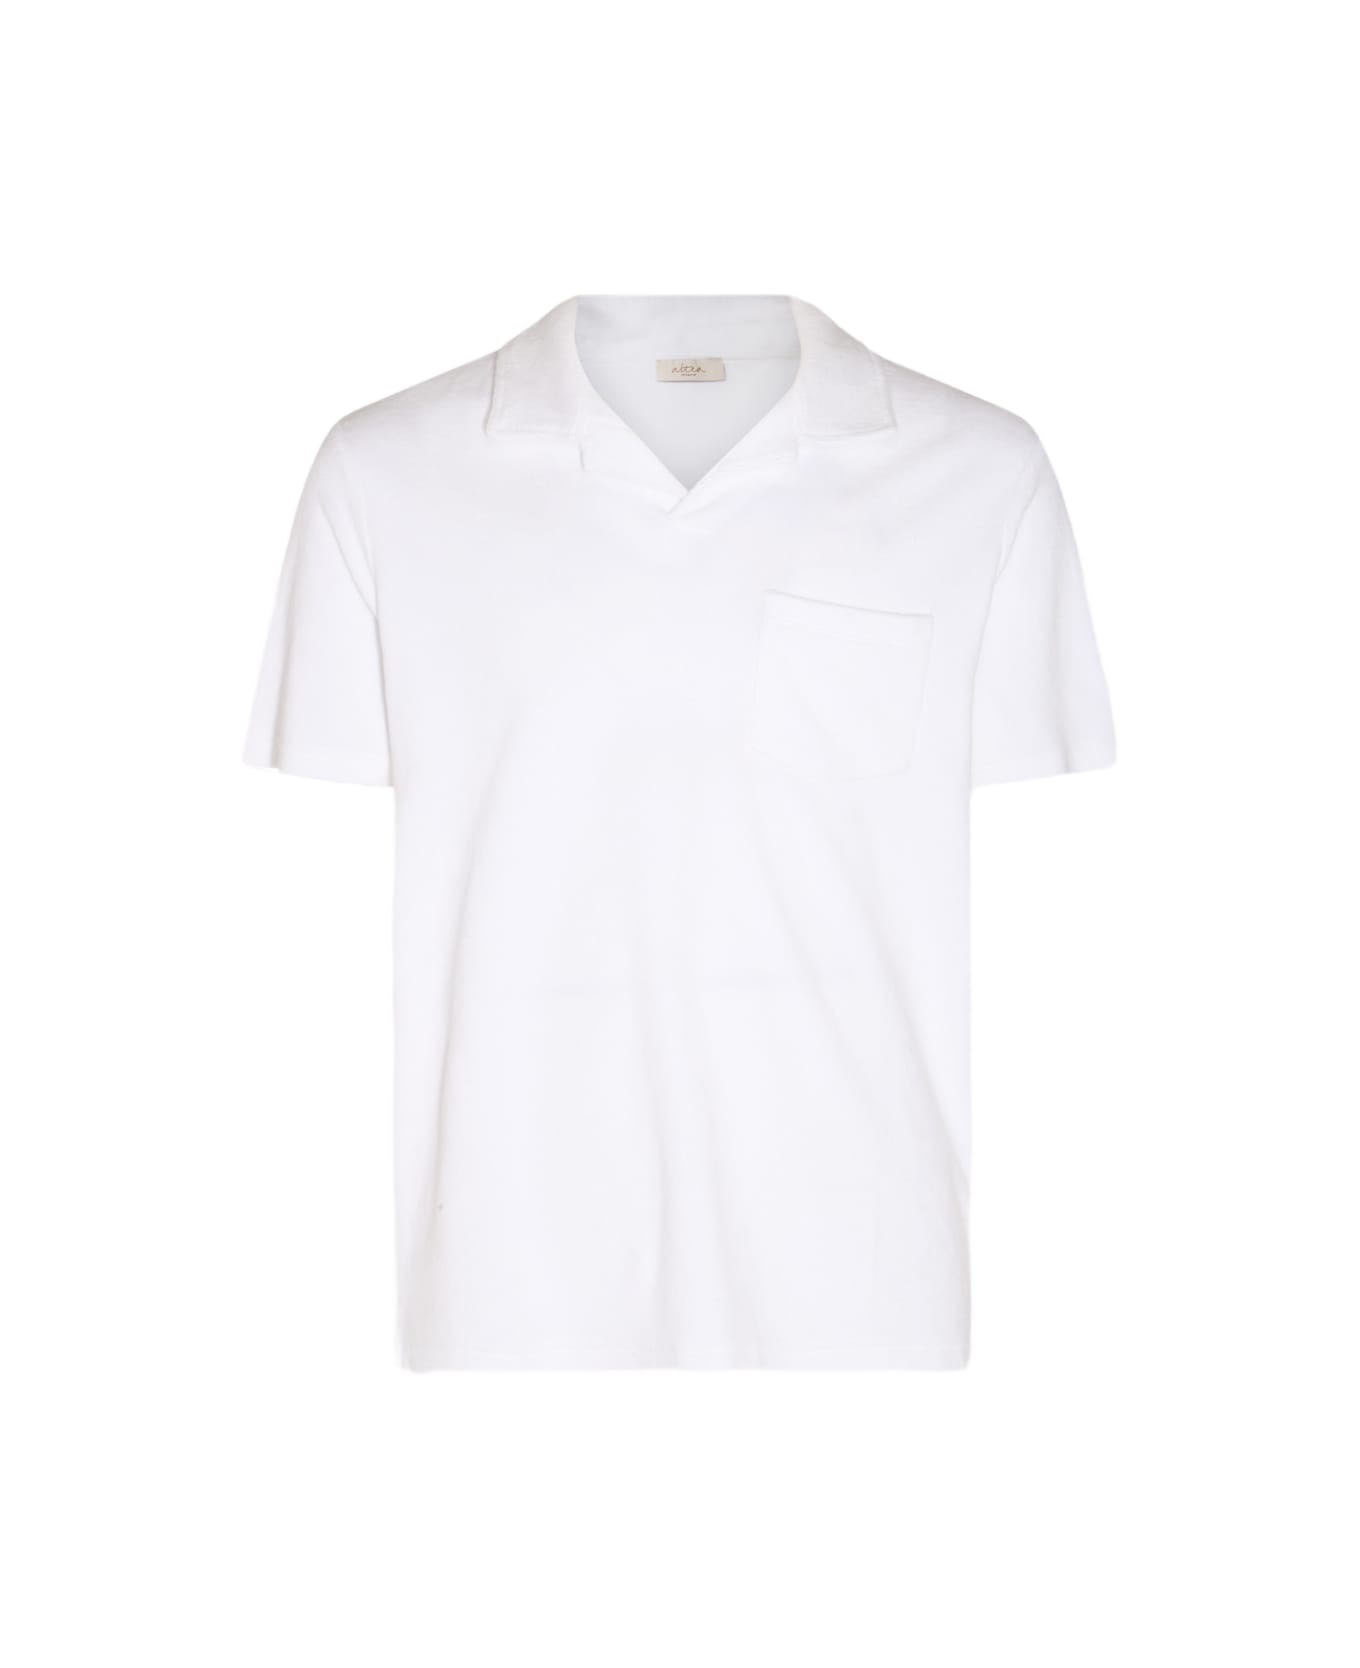 Altea White Cotton Polo Shirt - White ポロシャツ